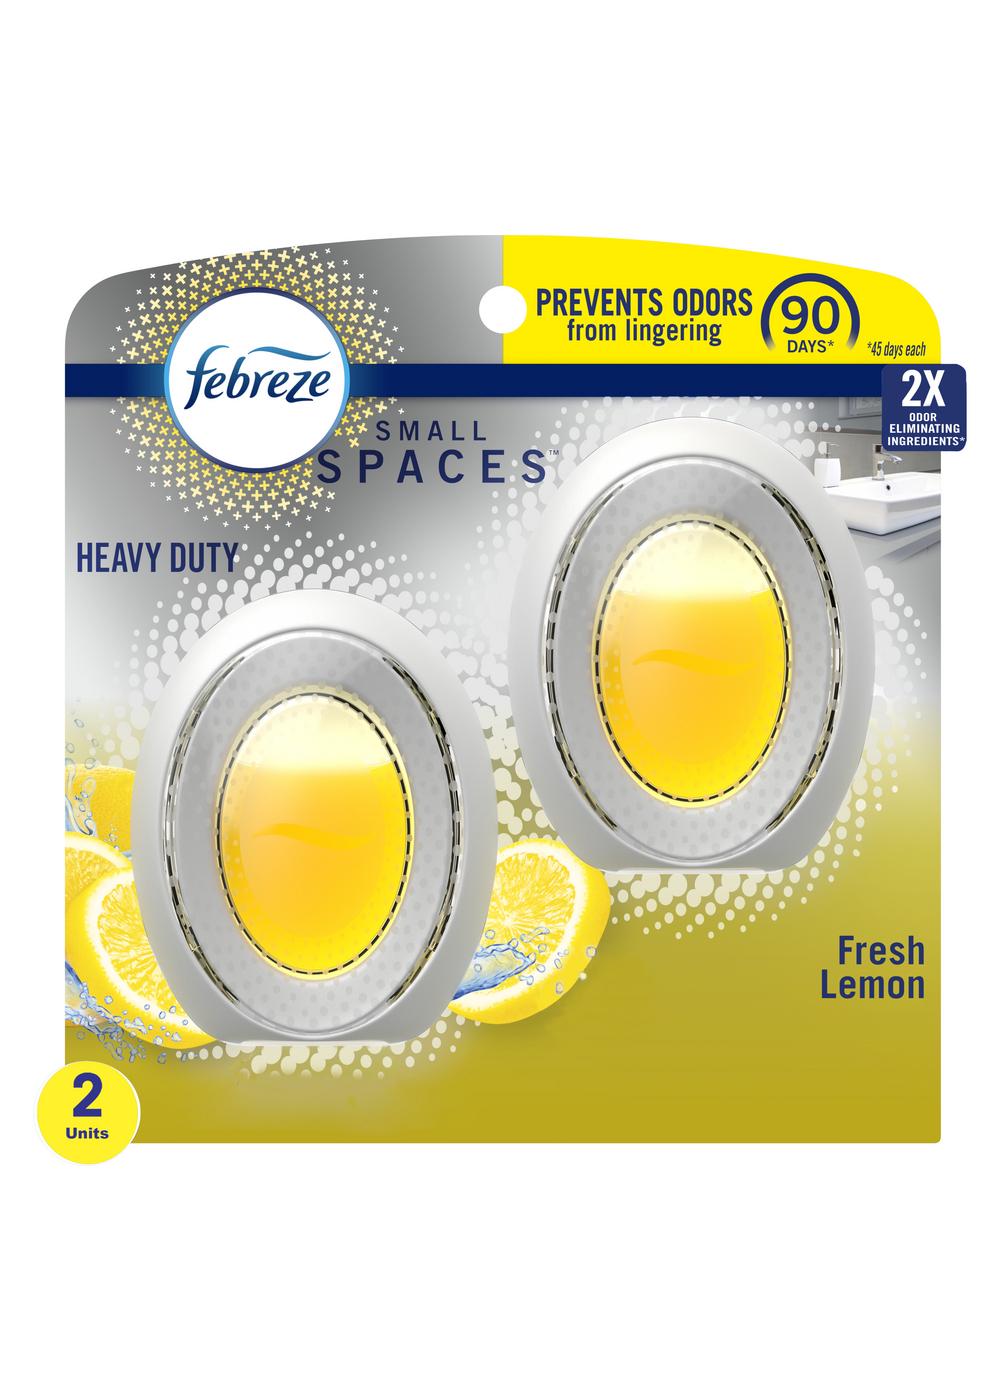 Febreze Small Spaces Heavy Duty Fresh Lemon Air Freshener; image 5 of 8